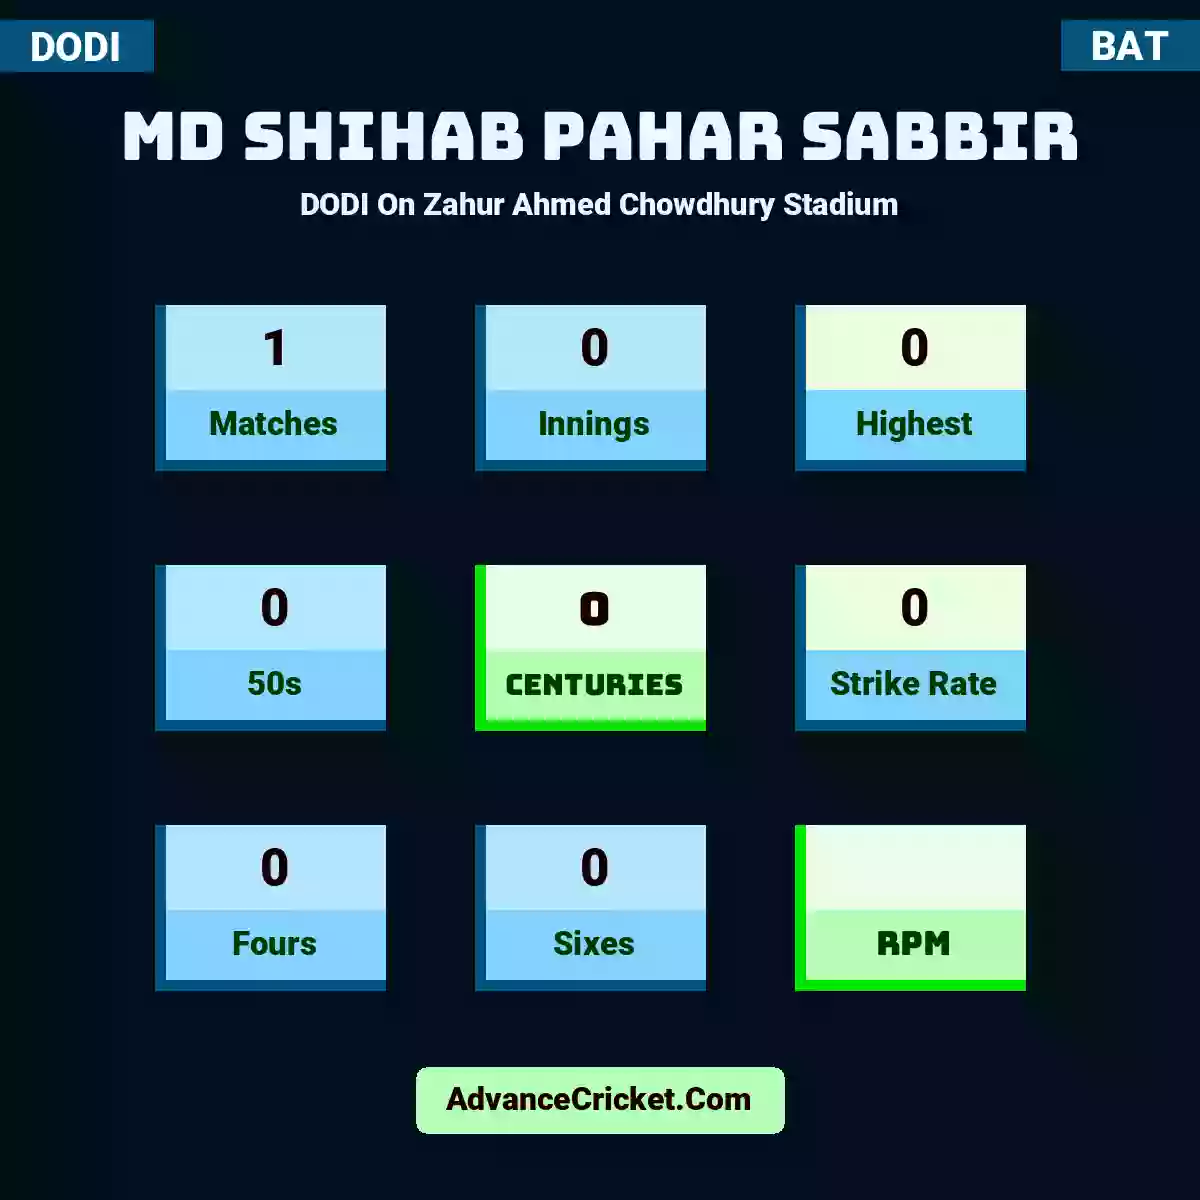 Md Shihab Pahar Sabbir DODI  On Zahur Ahmed Chowdhury Stadium, Md Shihab Pahar Sabbir played 1 matches, scored 0 runs as highest, 0 half-centuries, and 0 centuries, with a strike rate of 0. M.Shihab.Pahar.Sabbir hit 0 fours and 0 sixes.